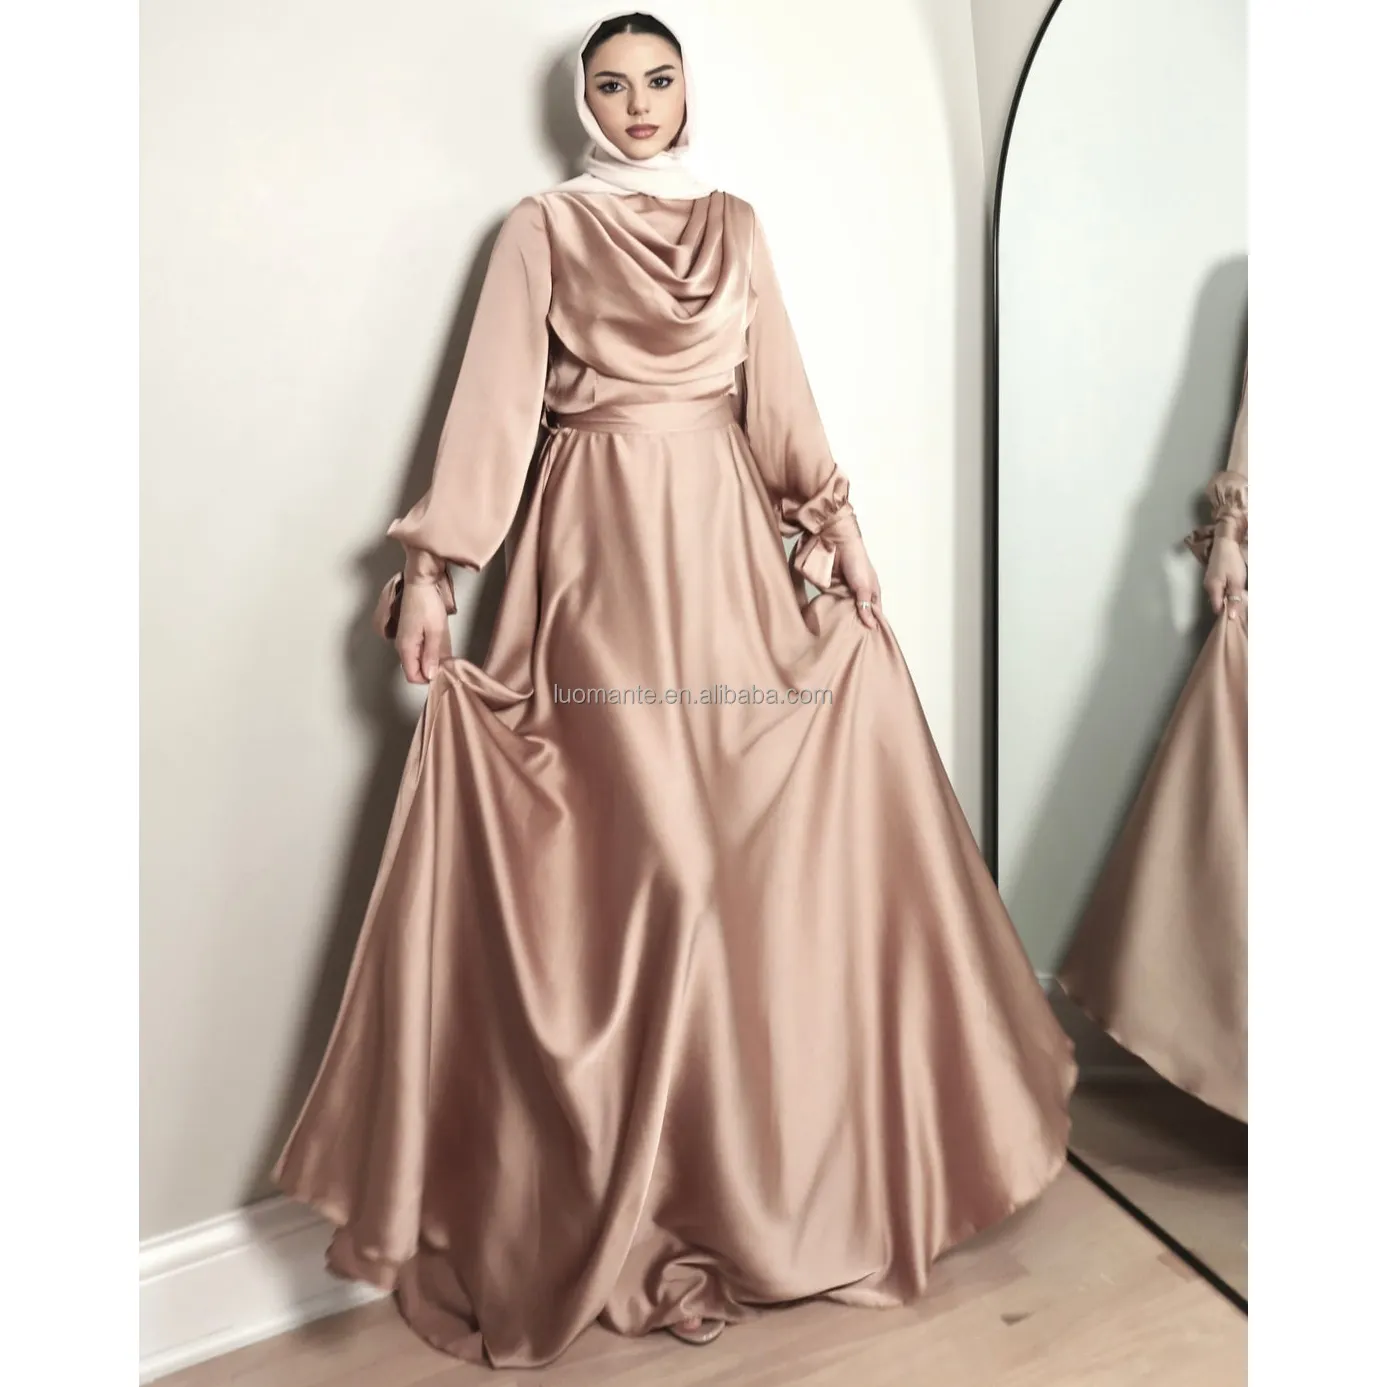 Vestidos de cetim islâmicos muçulmanos personalizados para mulheres, vestidos elegantes e modestos para damas de honra, vestido modesto bege